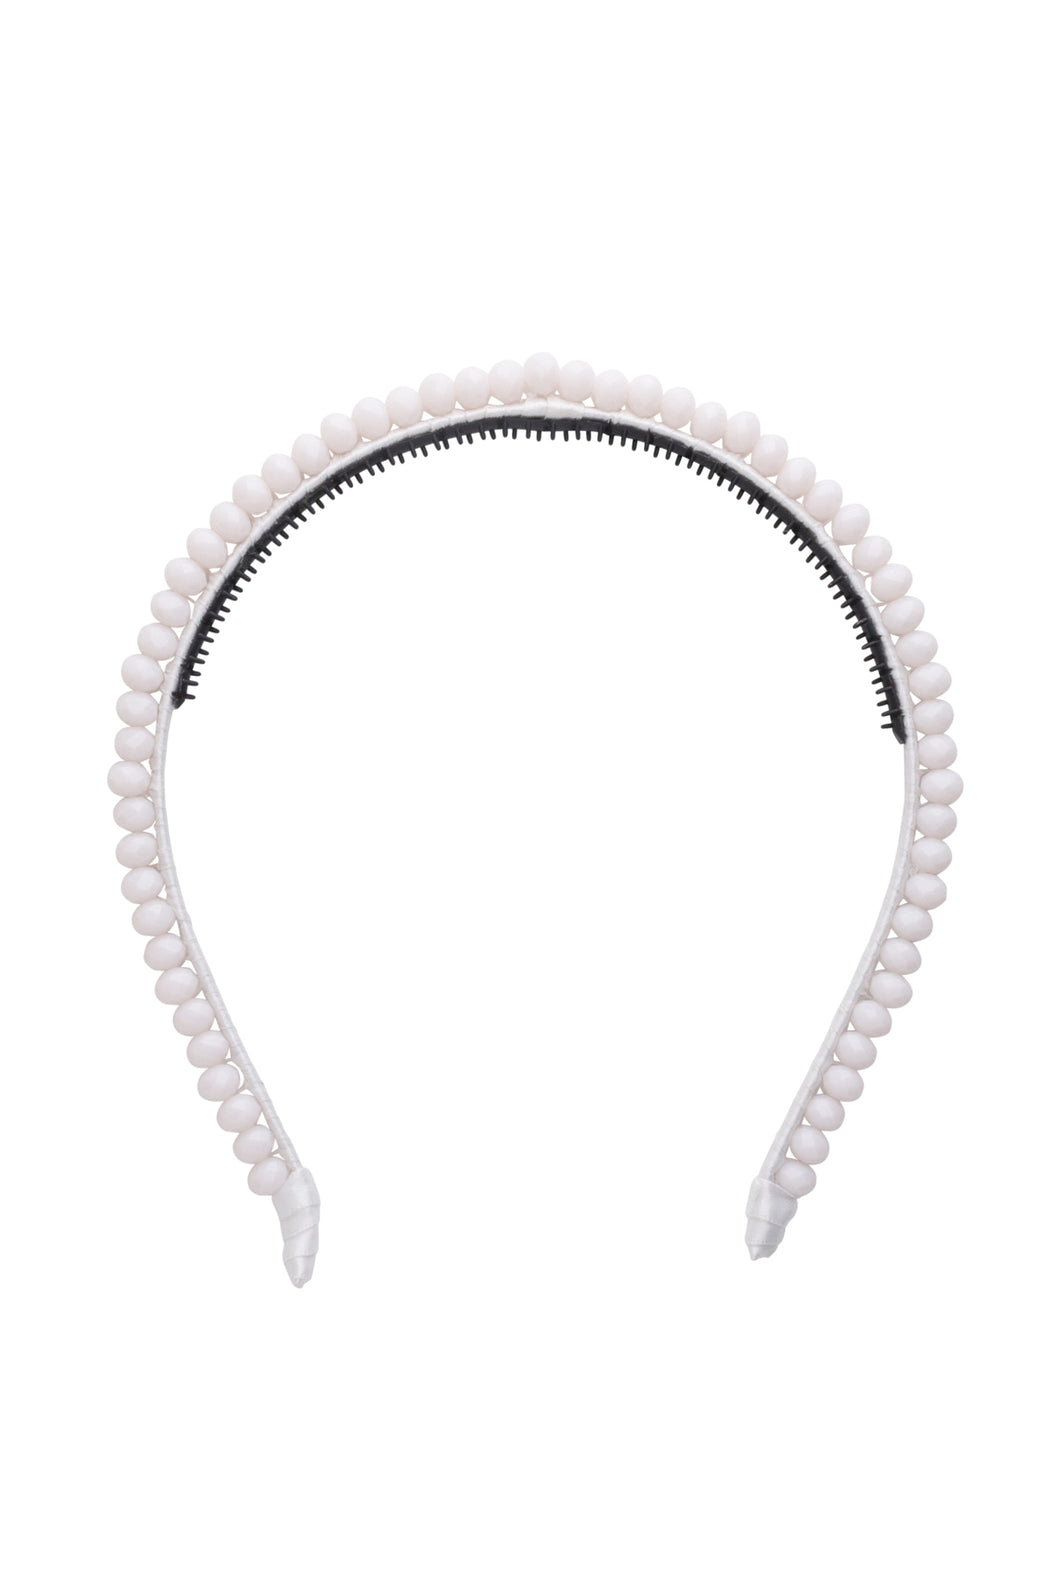 Rock Candy Headband - White